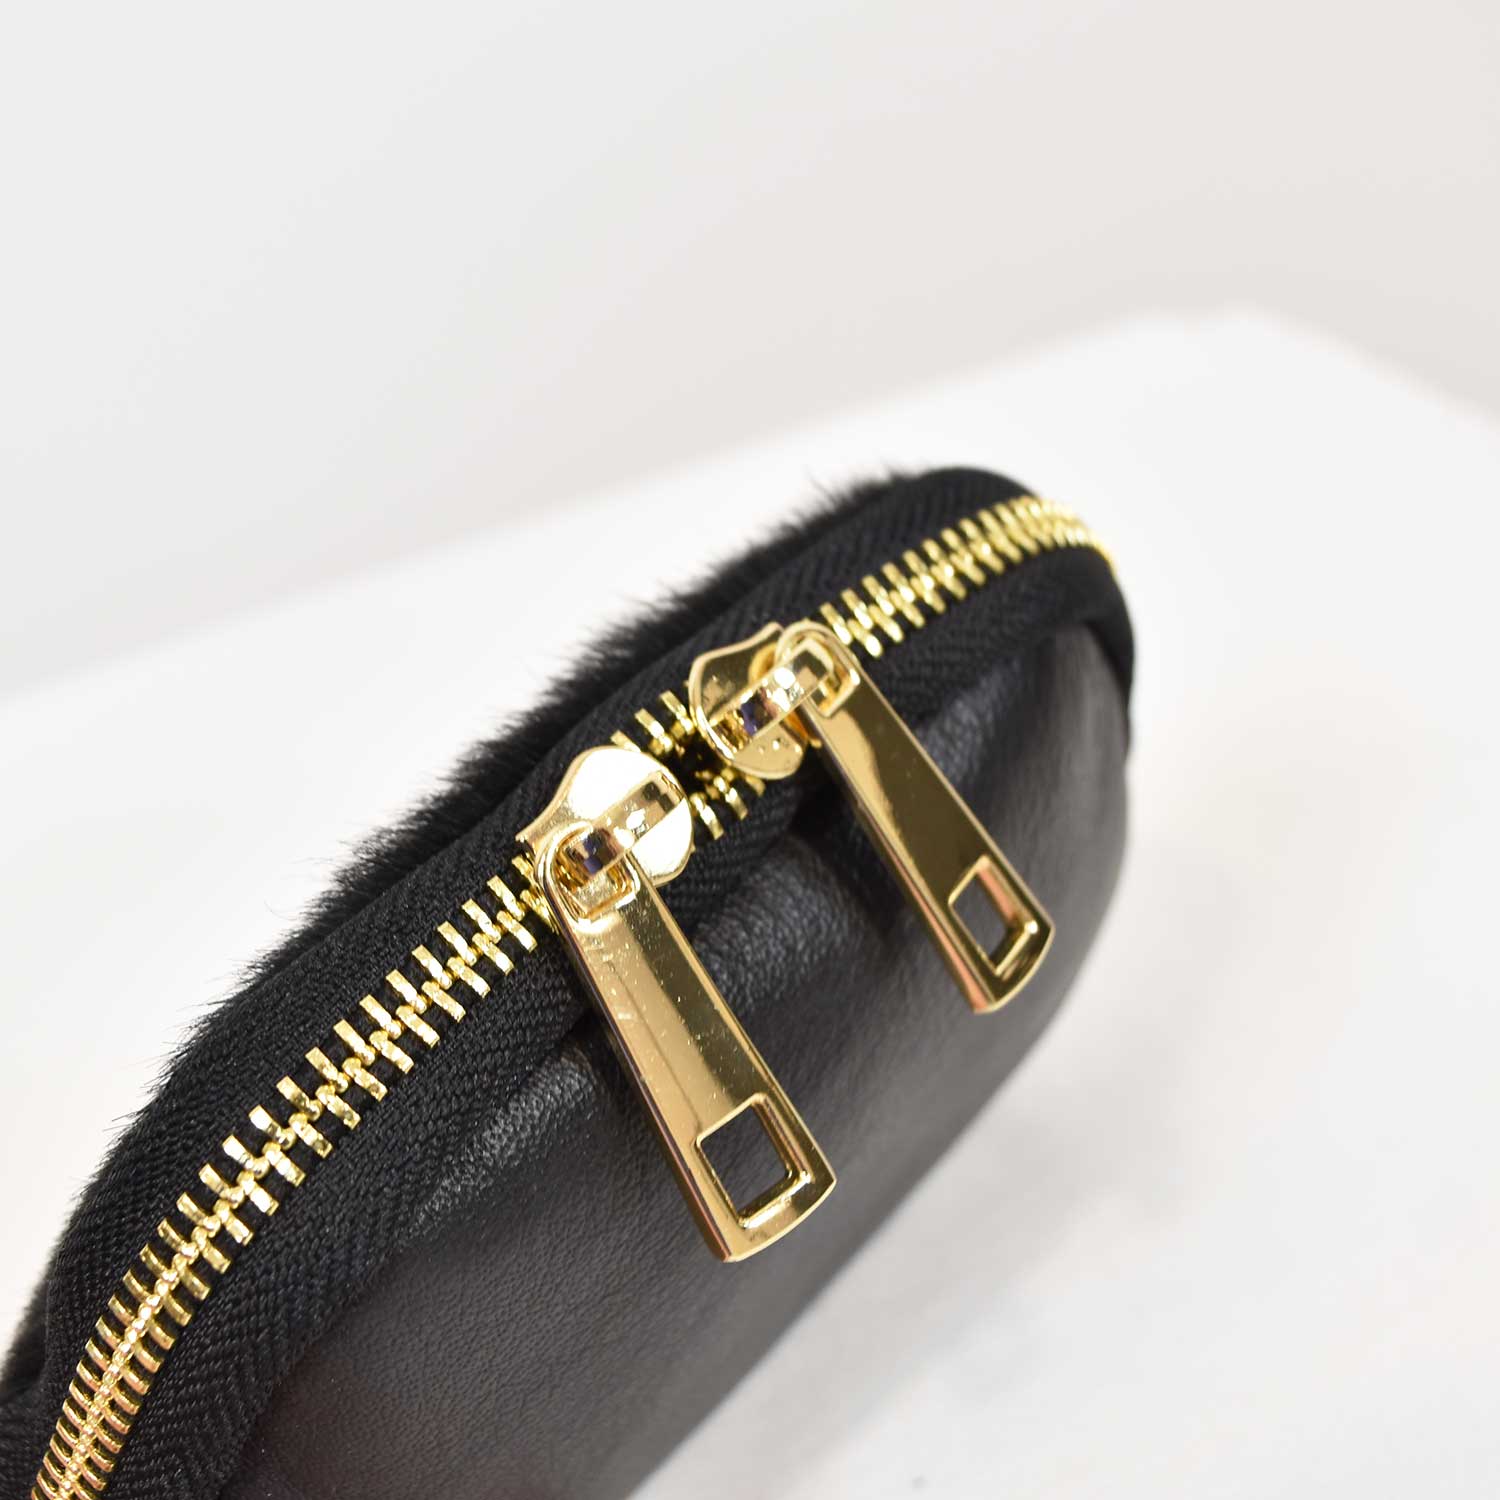 Black fur purse